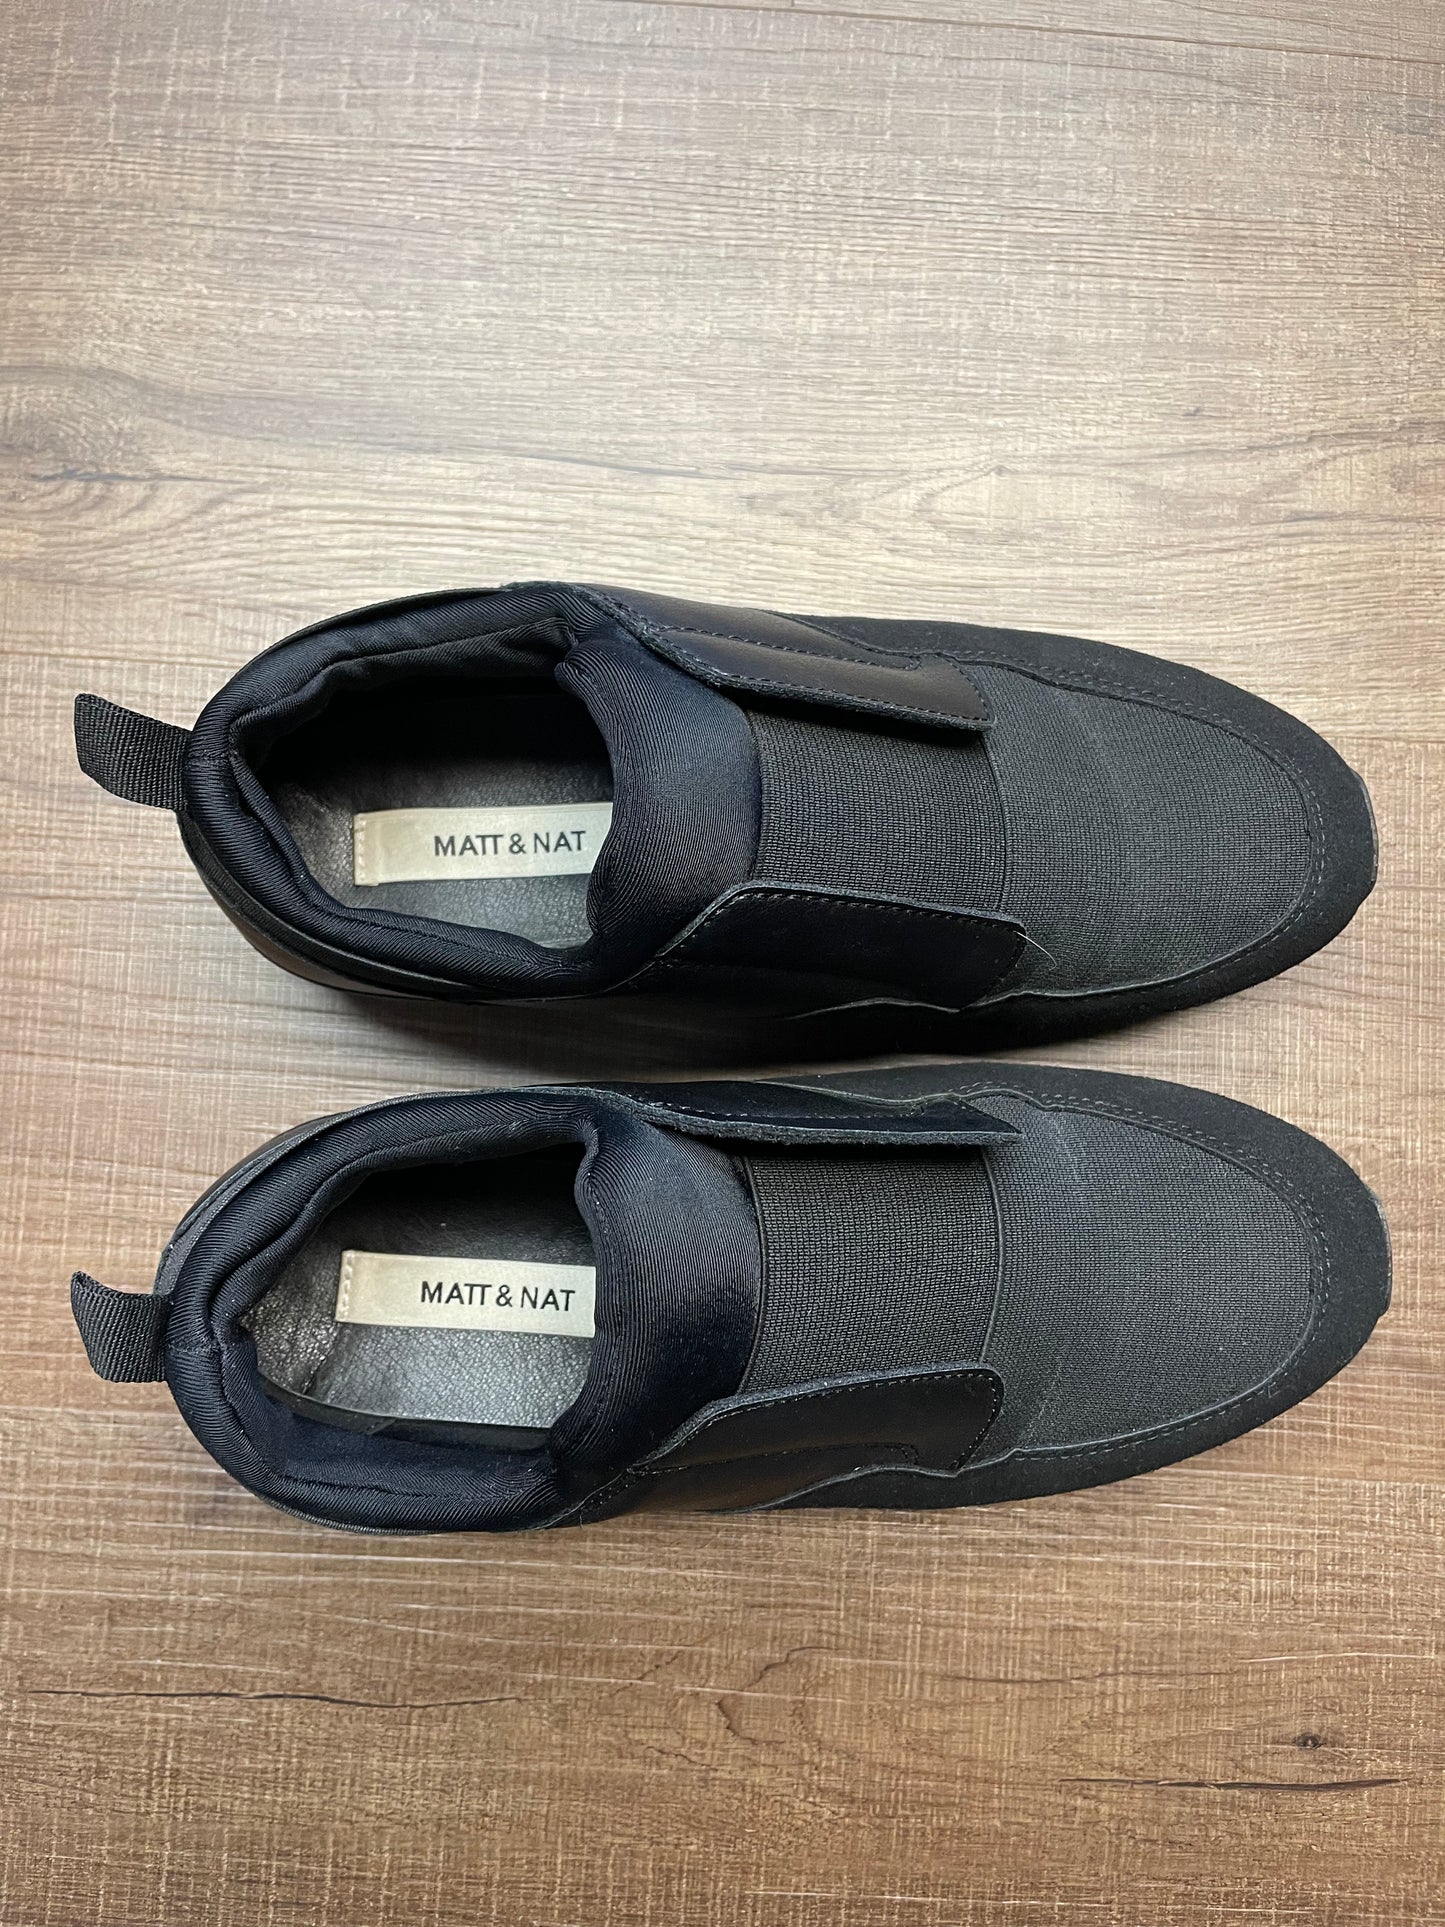 Matt & Nat TESS Vegan Running Shoes (8.5)